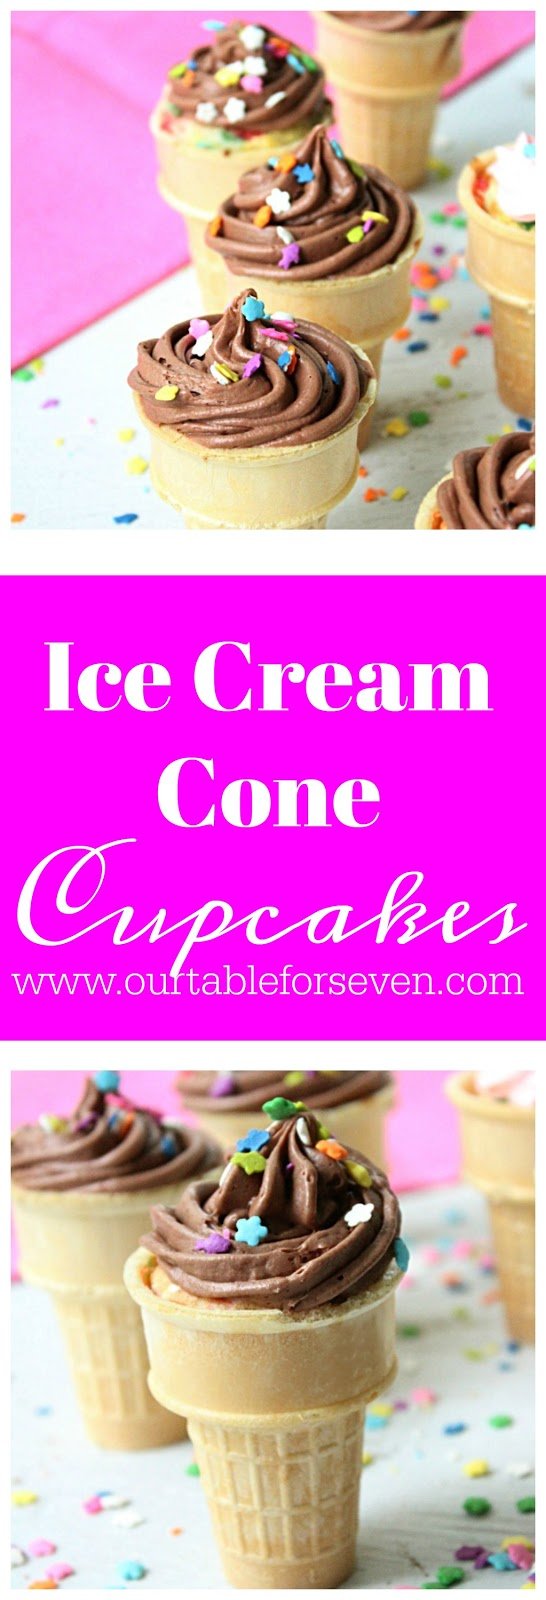 Ice Cream Cone Cupcakes #cupcakes #icecreamcones #dessert #cakemix #tableforsevenblog